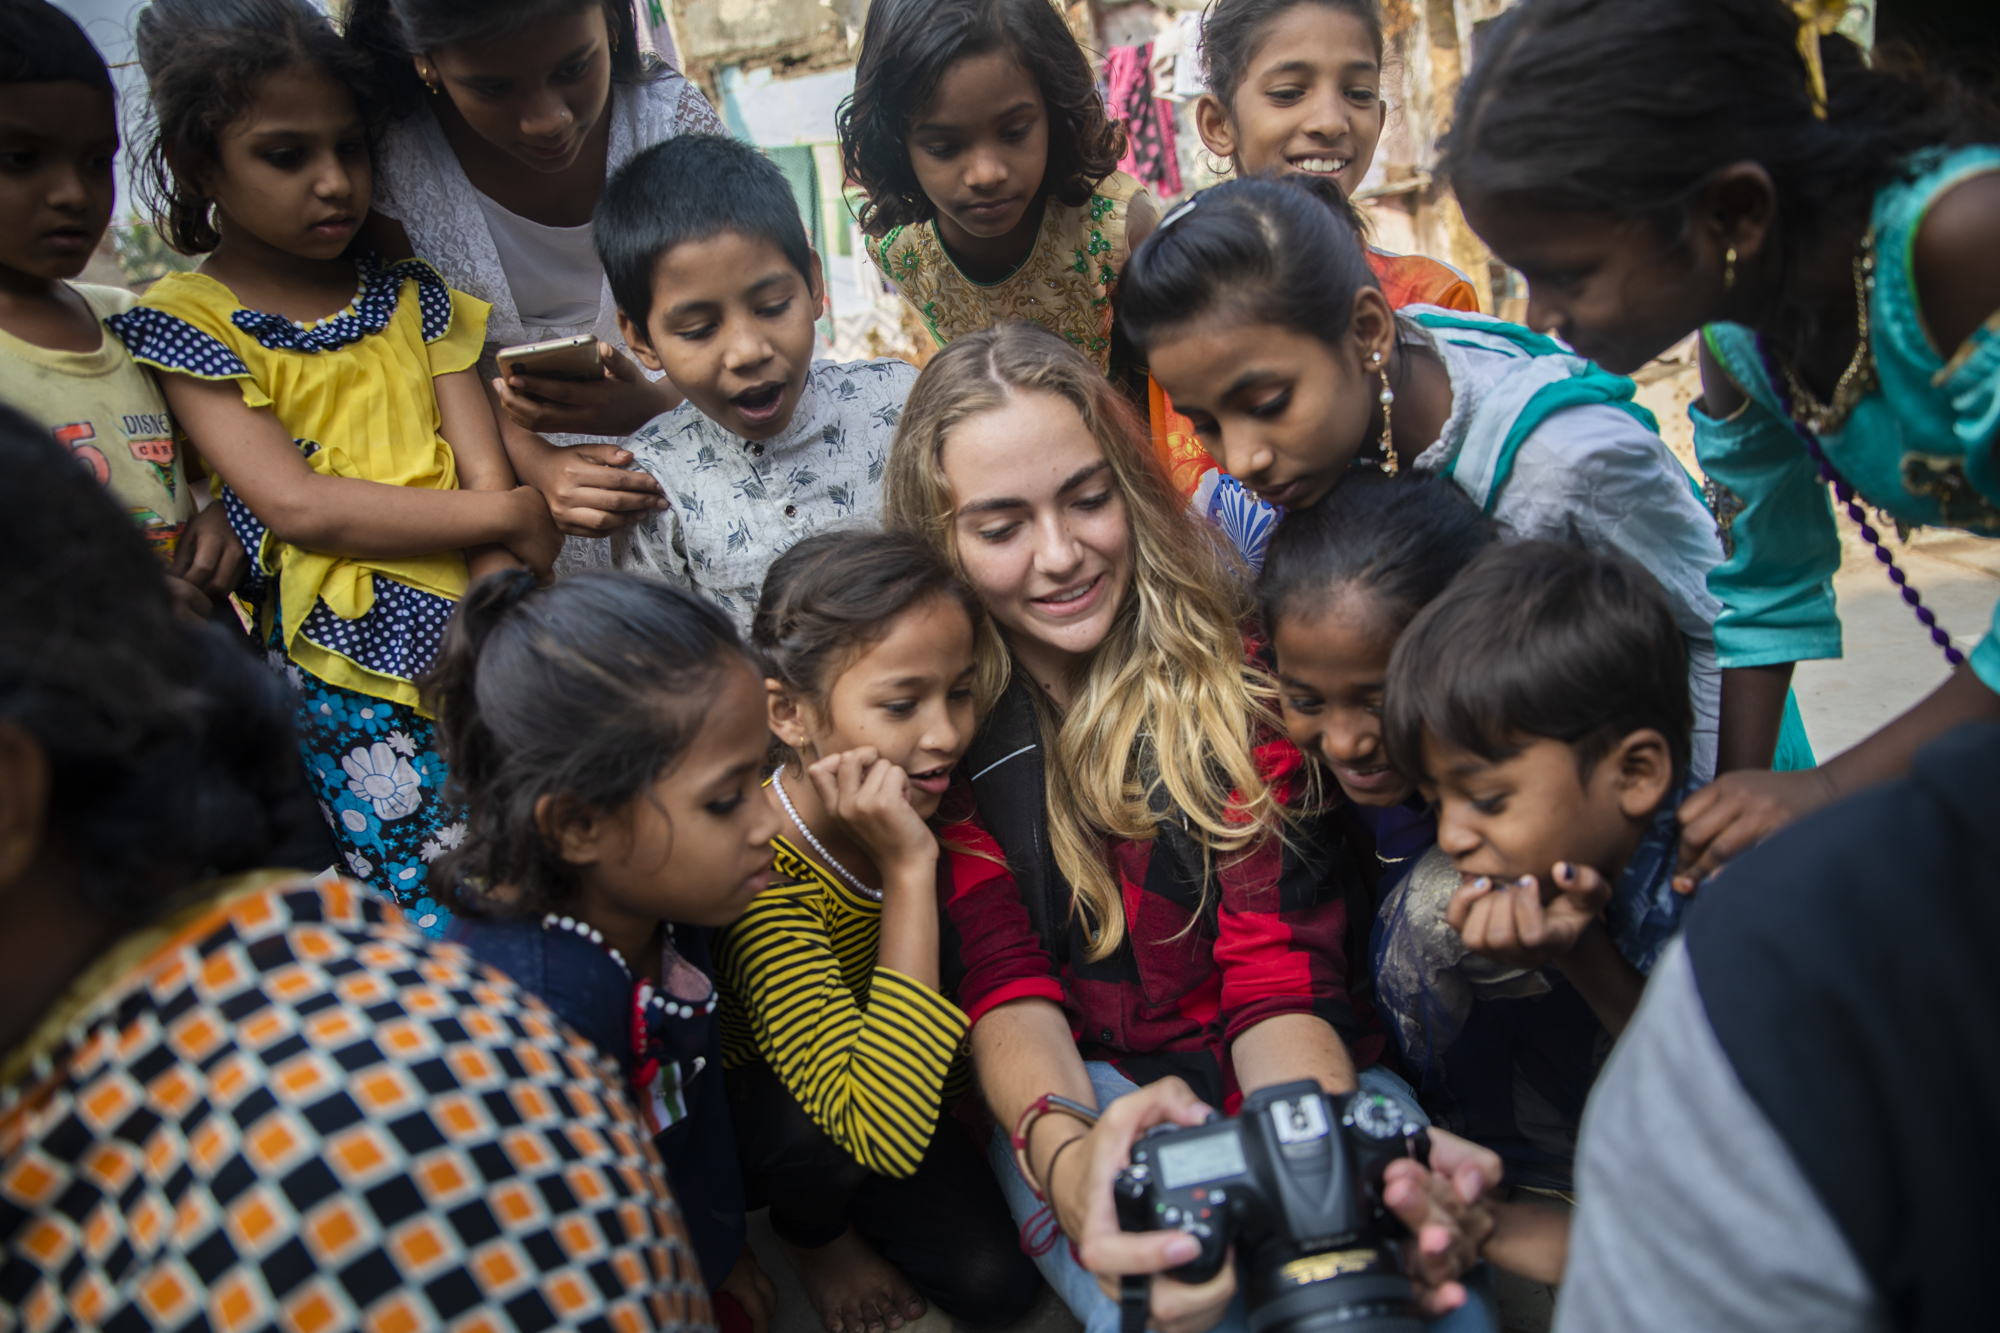 Journalism student Marena Jansevanrensburg shows Mumbai children photos on her camera. Photo: Dylan Crawford